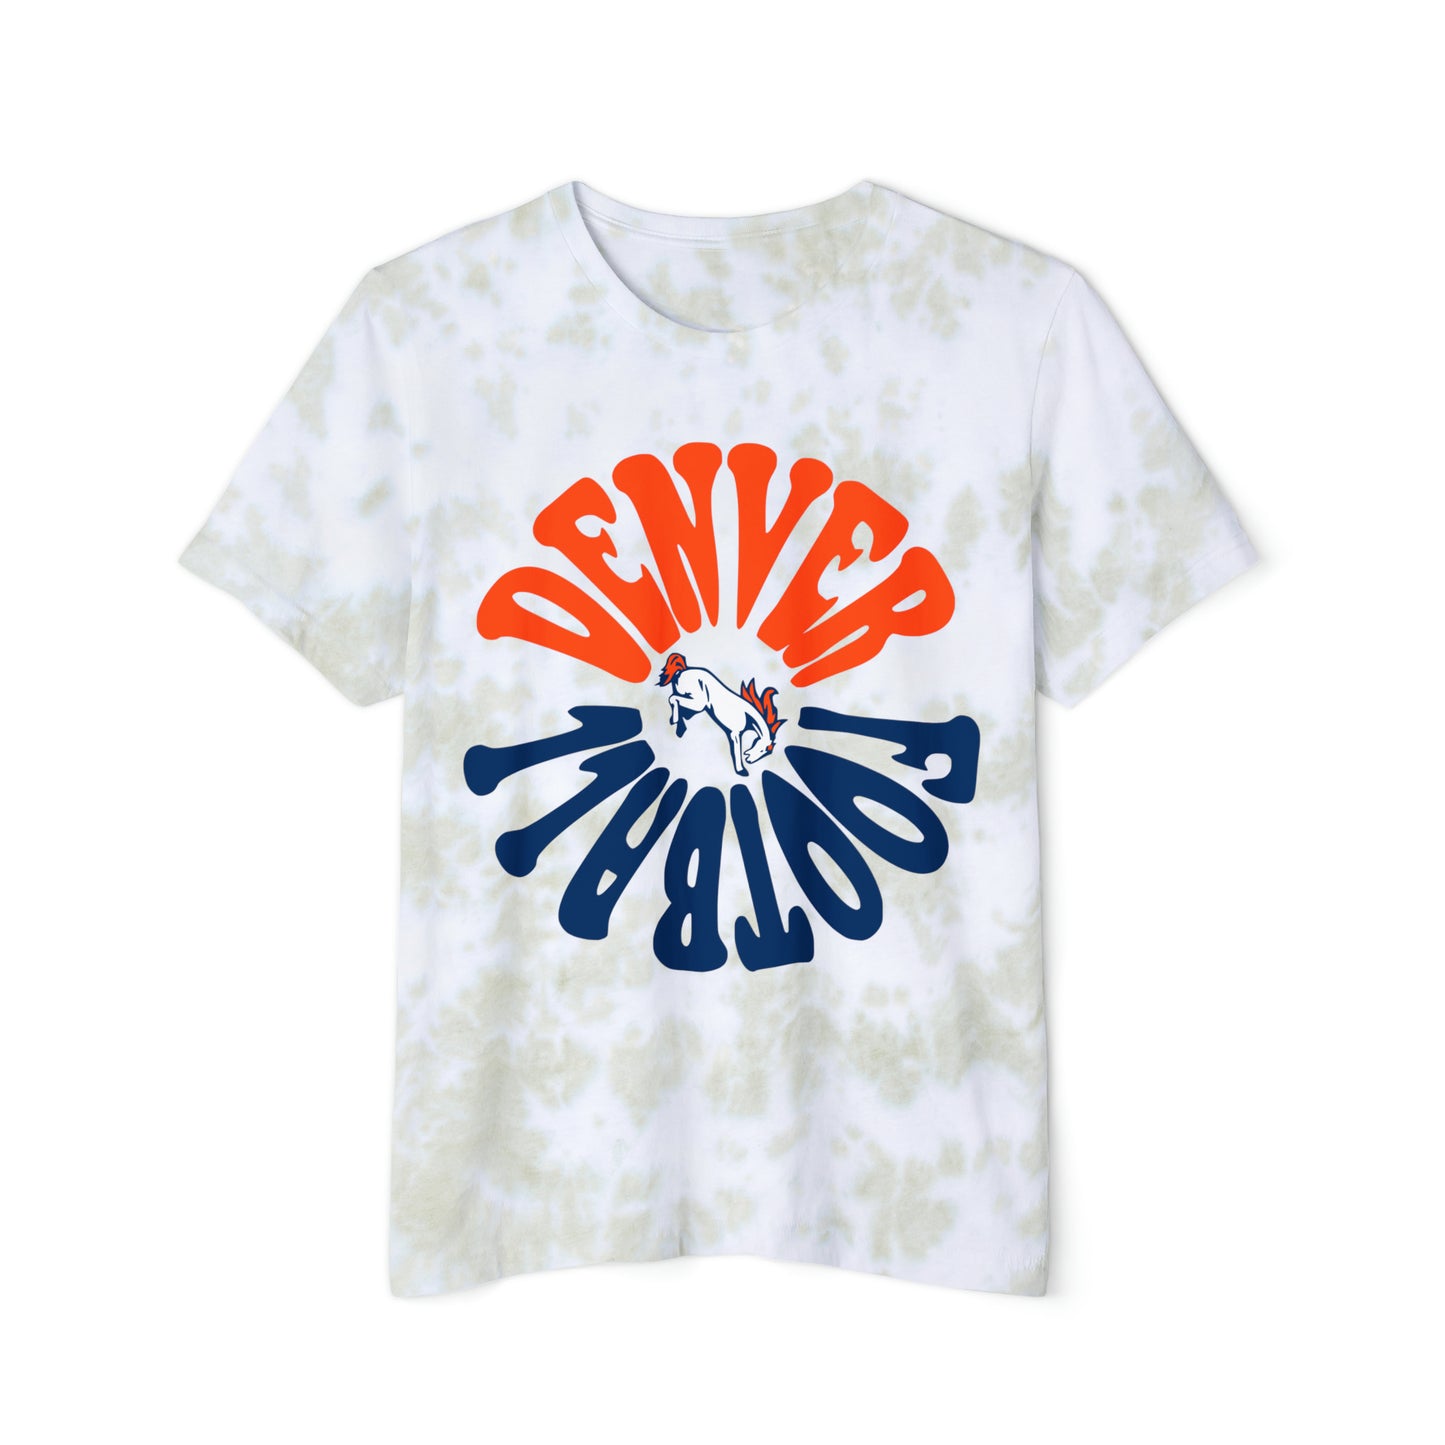 Tie Dye Retro Denver Broncos Tee - Vintage Colorado Football Short Sleeve T-Shirt - Men's & Women's - Design 2